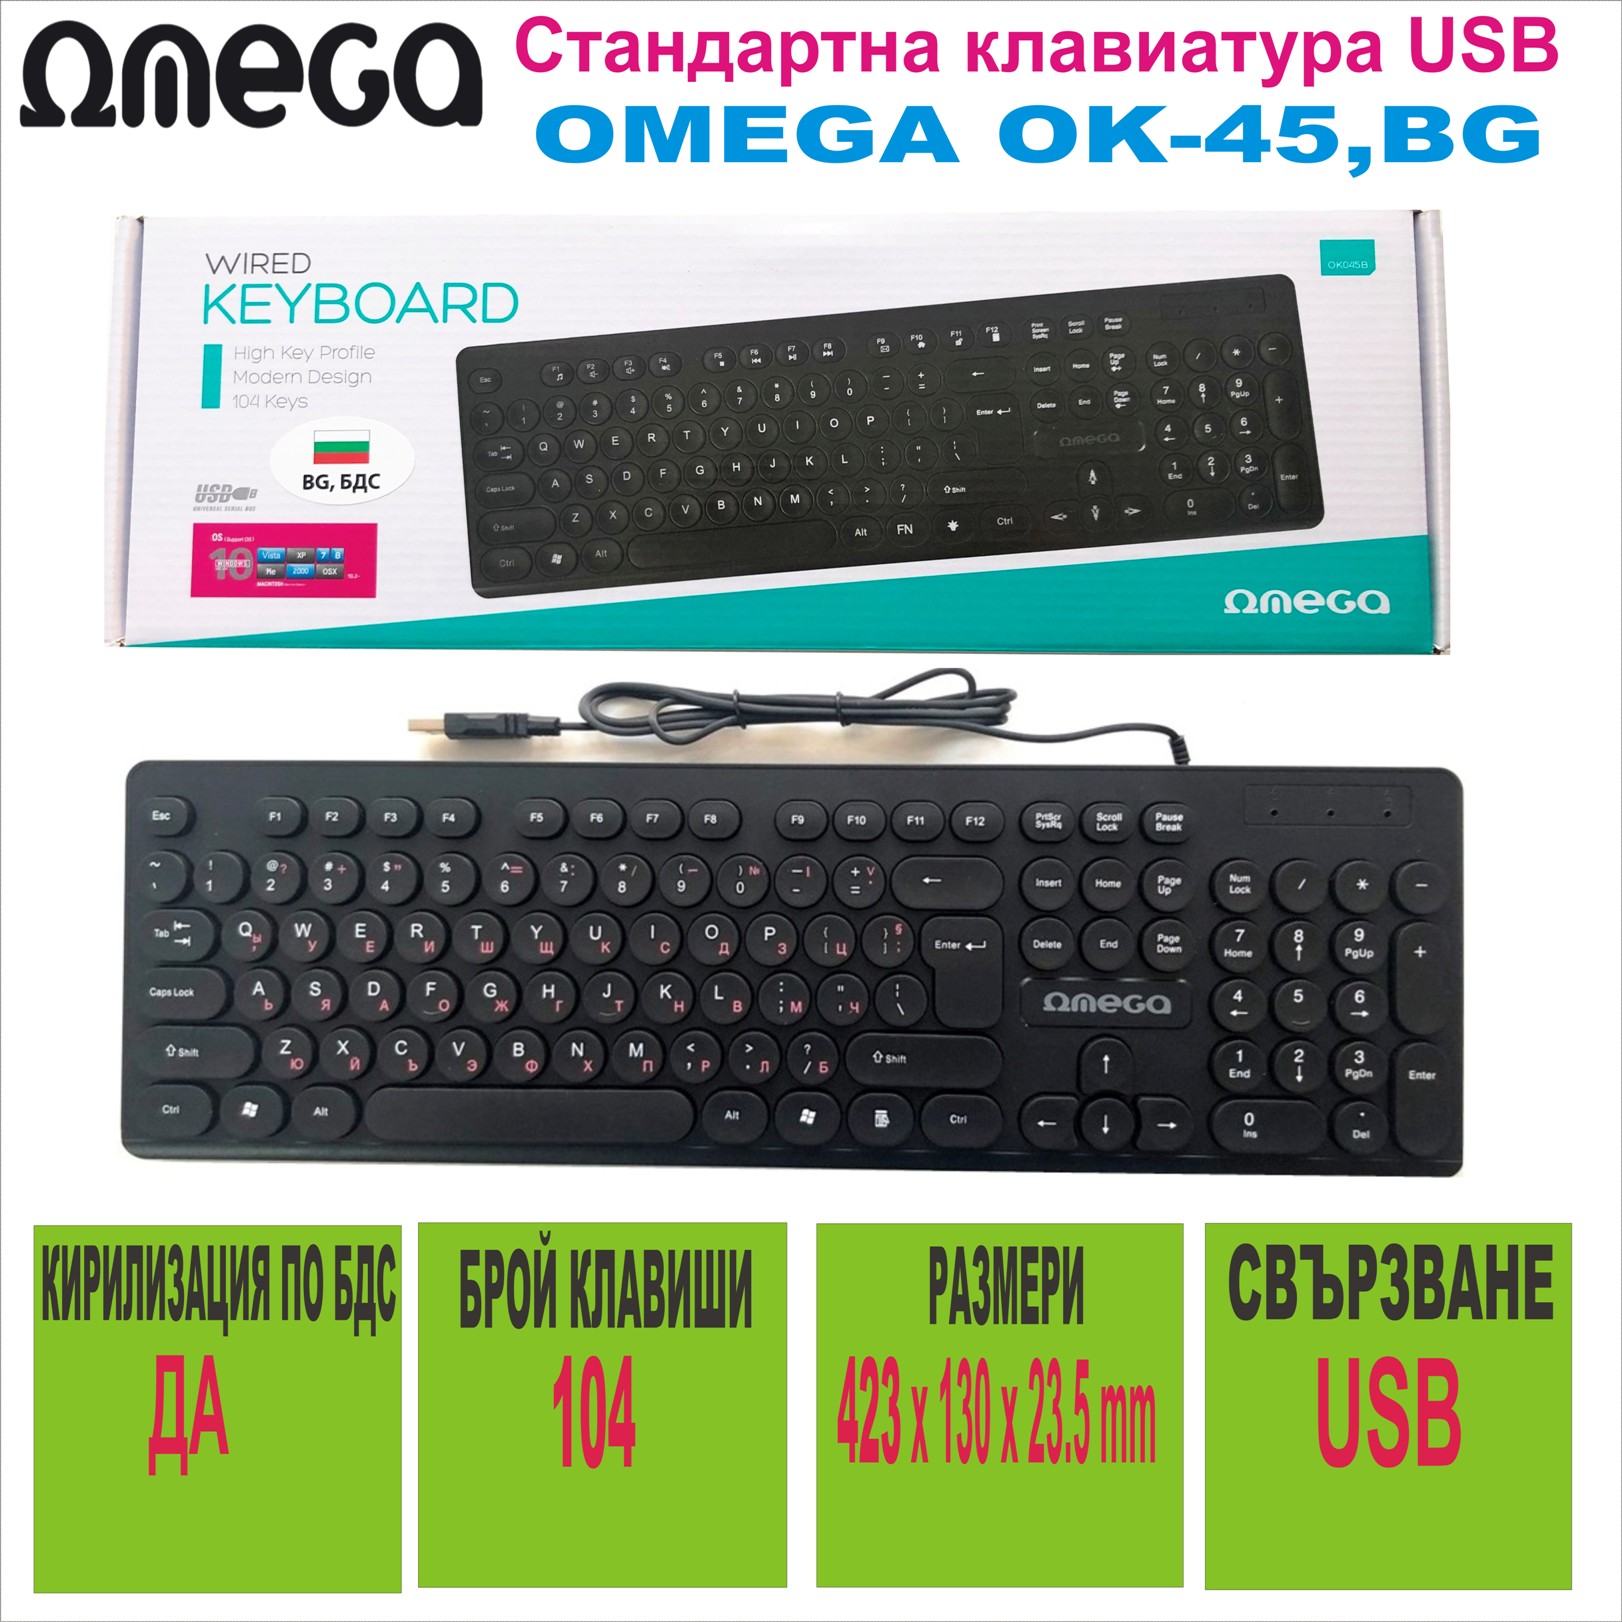 Стандартна клавиатура USB OMEGA OK-45B,BG